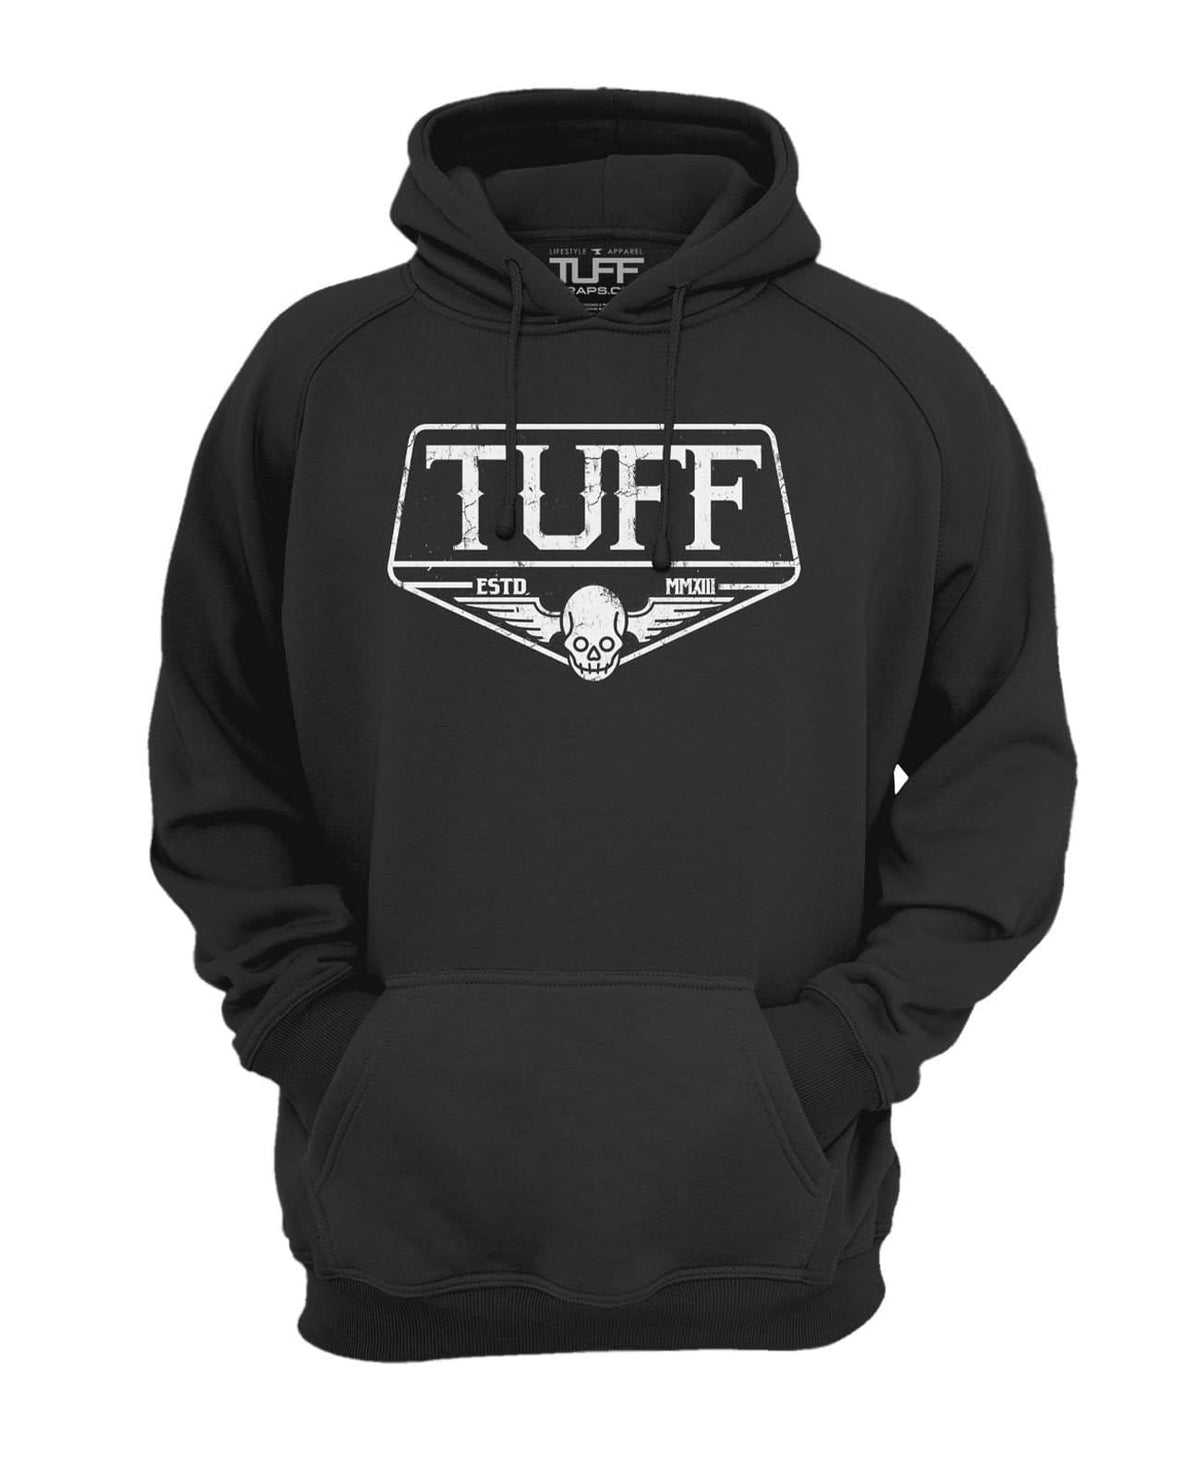 TUFF Skull Wings Hooded Sweatshirt XS / Black with White TuffWraps.com